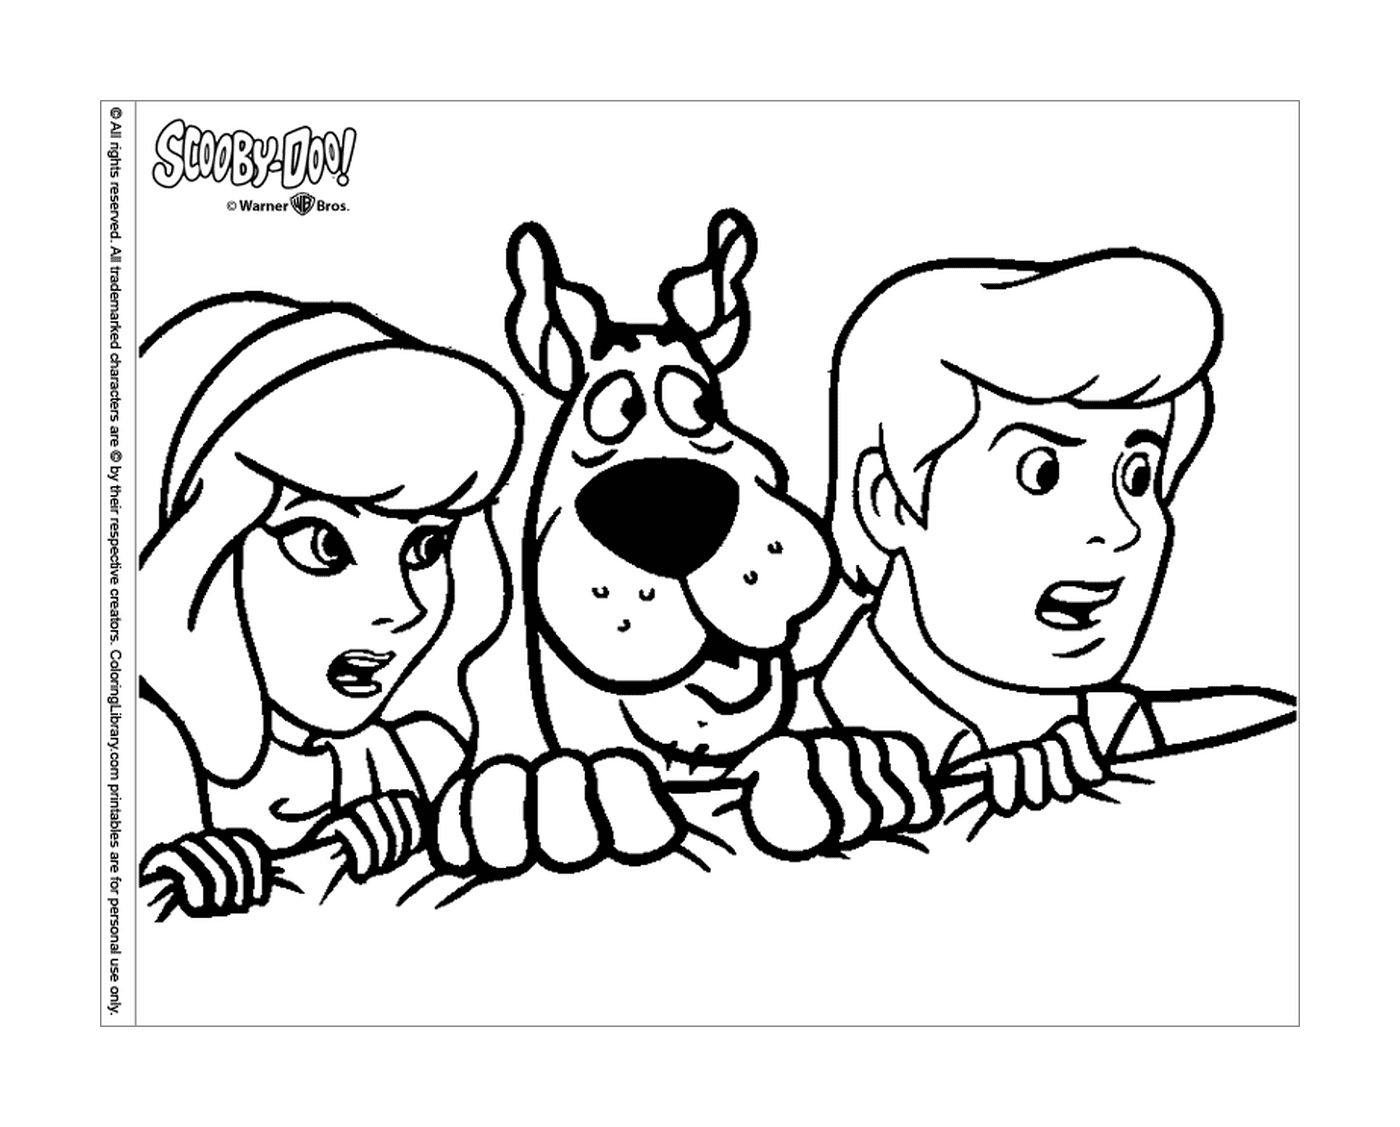  La band di Scooby-Doo 